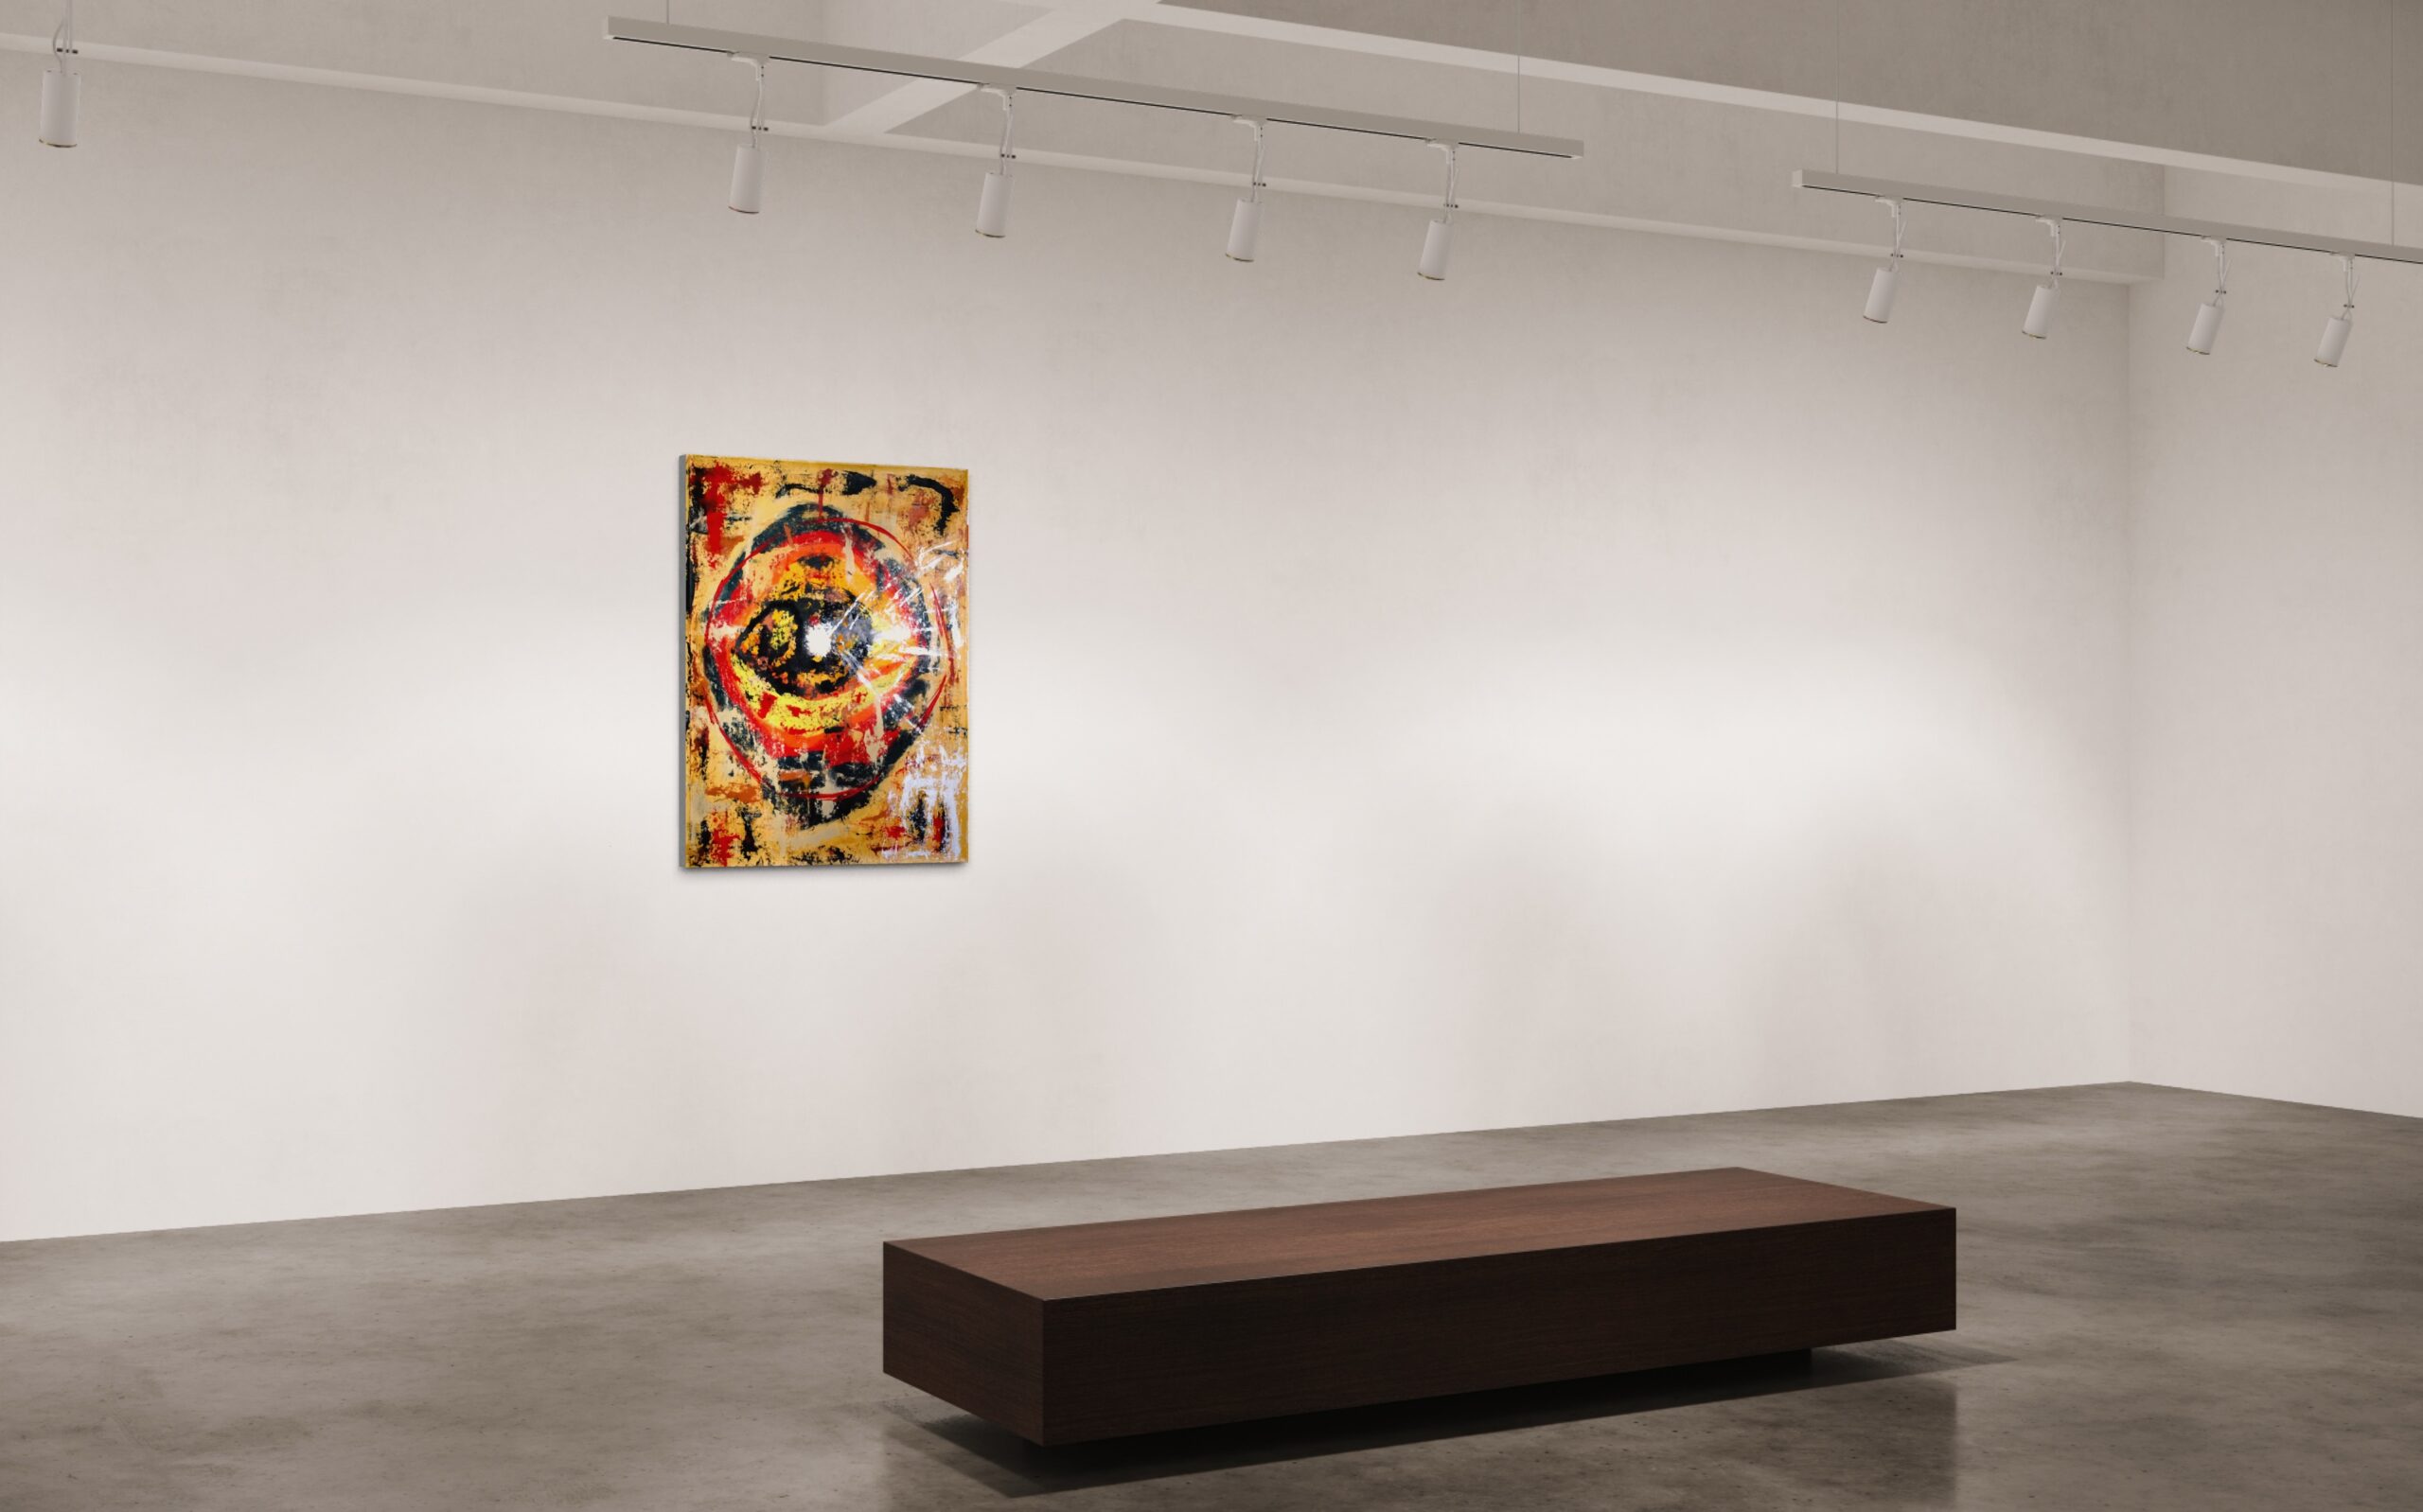  Uzoma Obasi | Abstract Art | Fine Art Prints | Cool Art